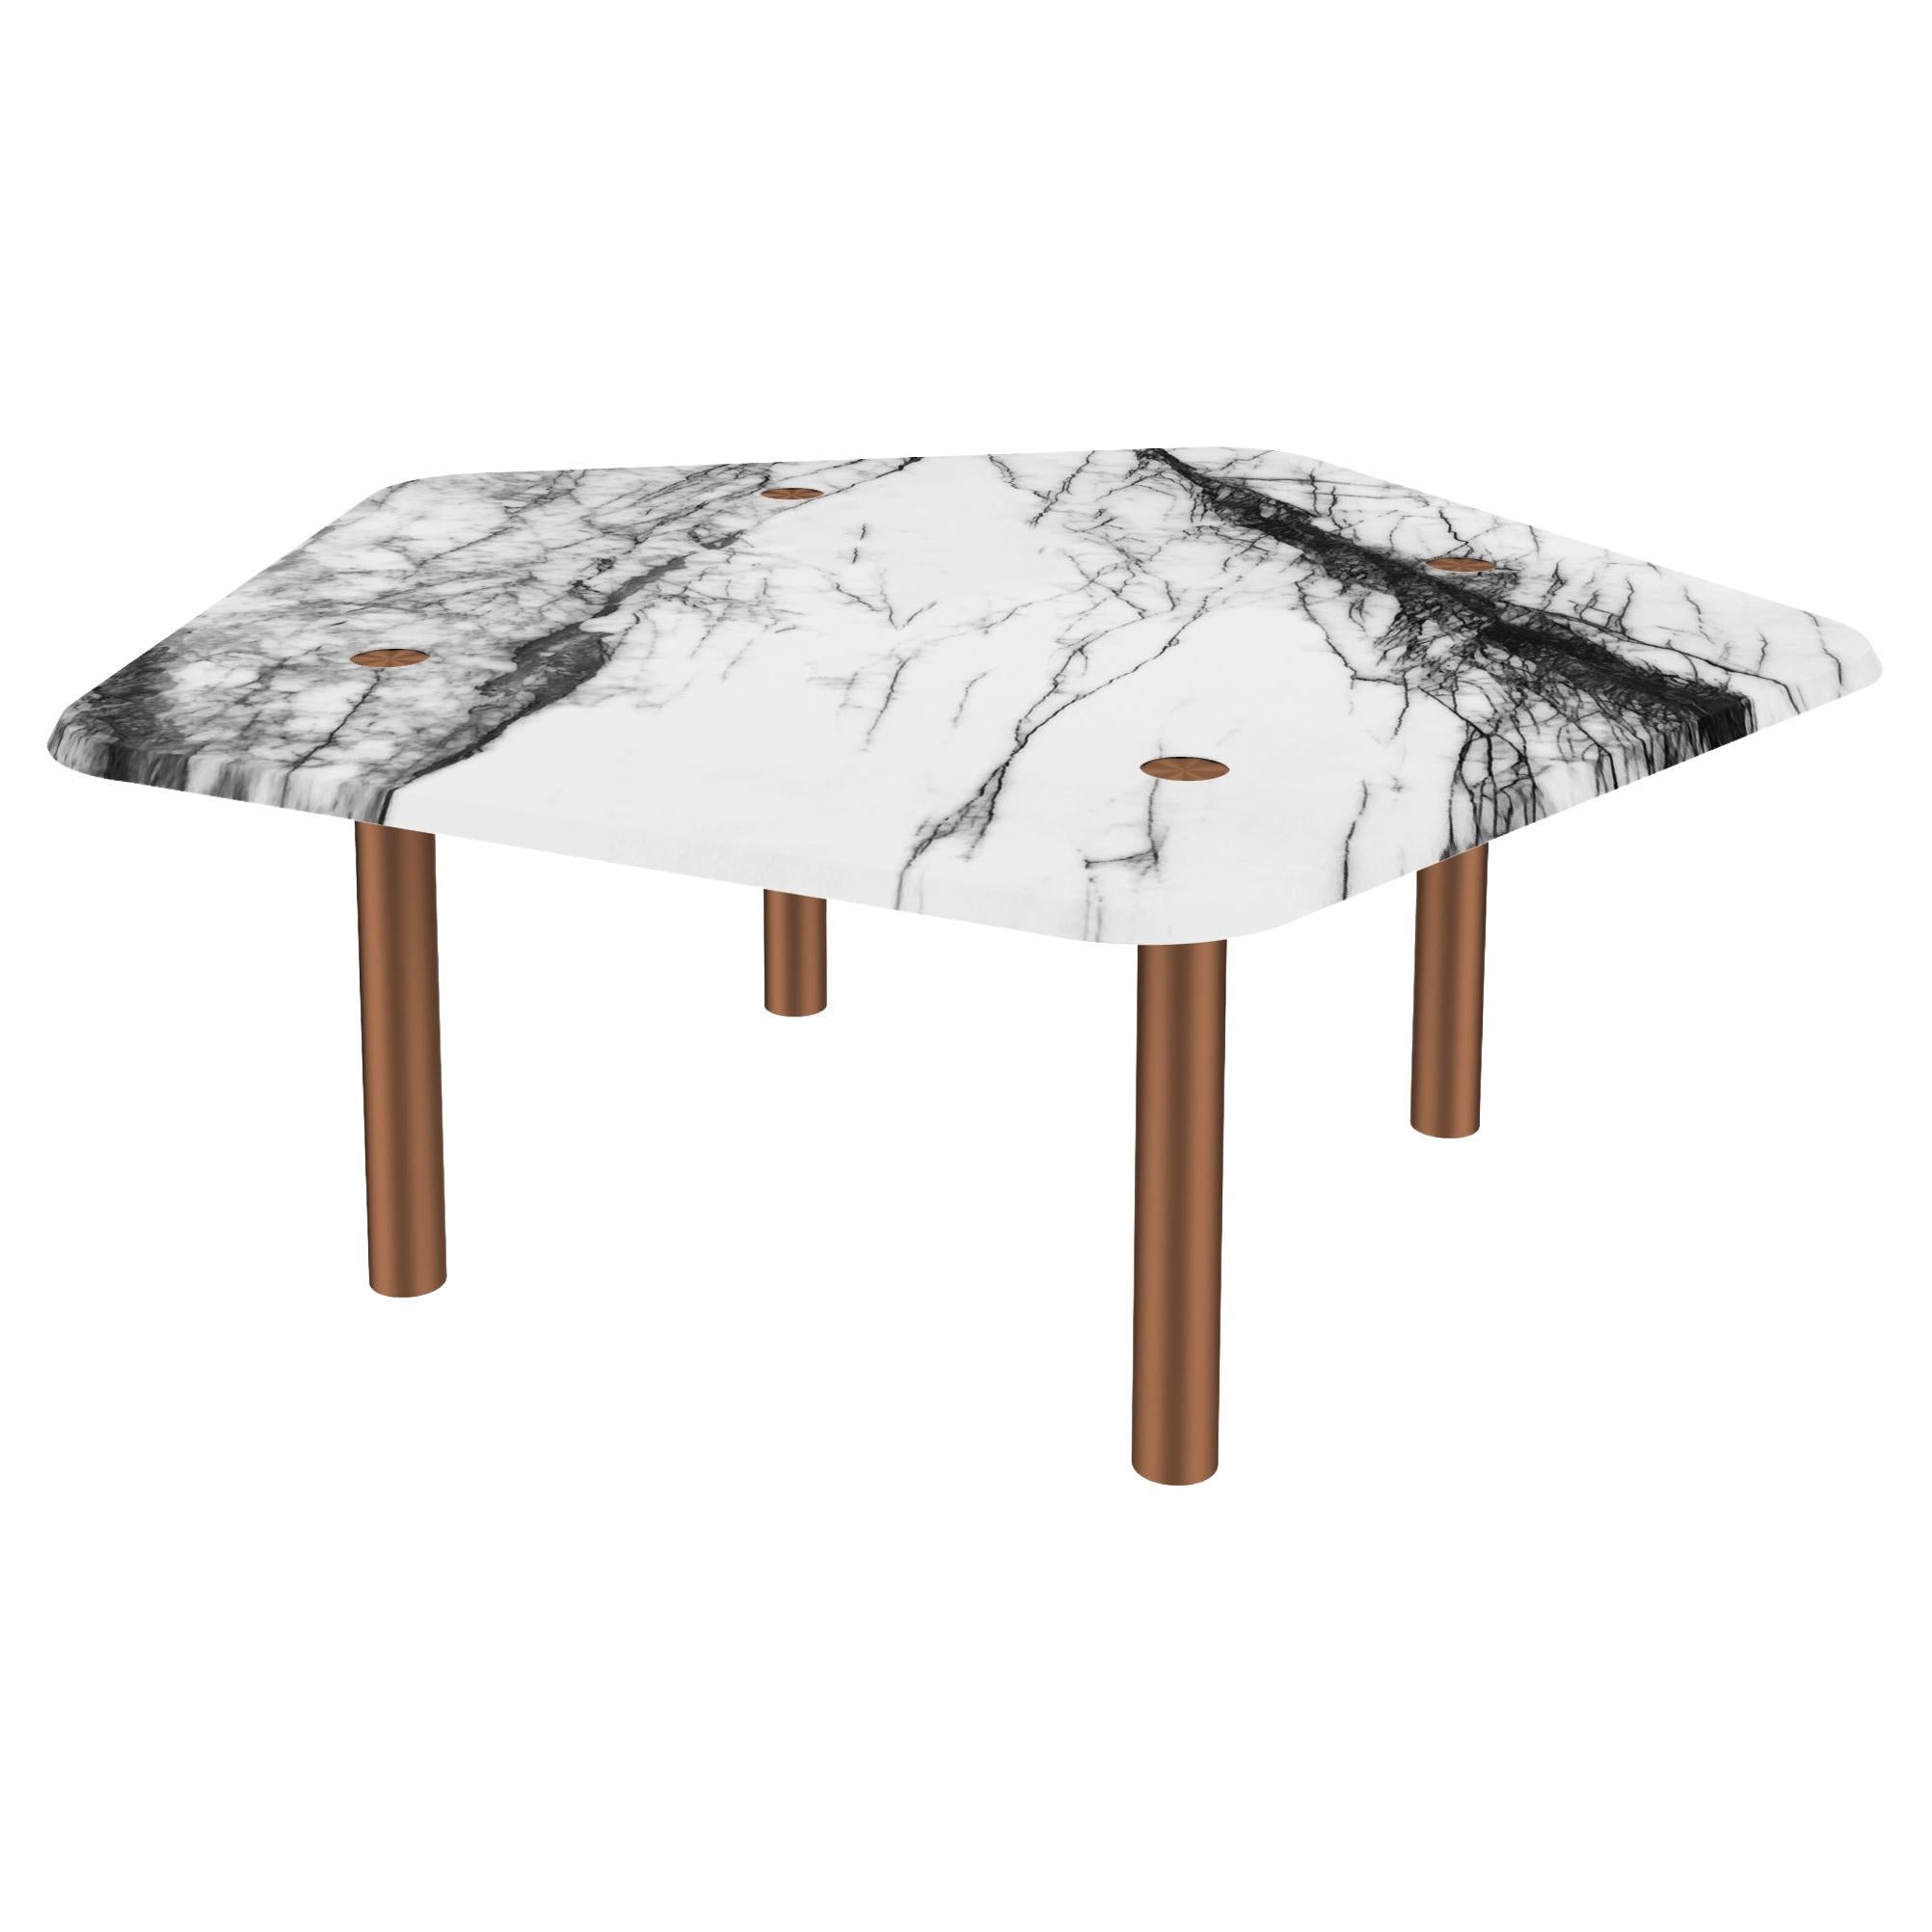 NORDST JOB Coffee Table, Italian White Mountain Marble, Danish Modern Design For Sale